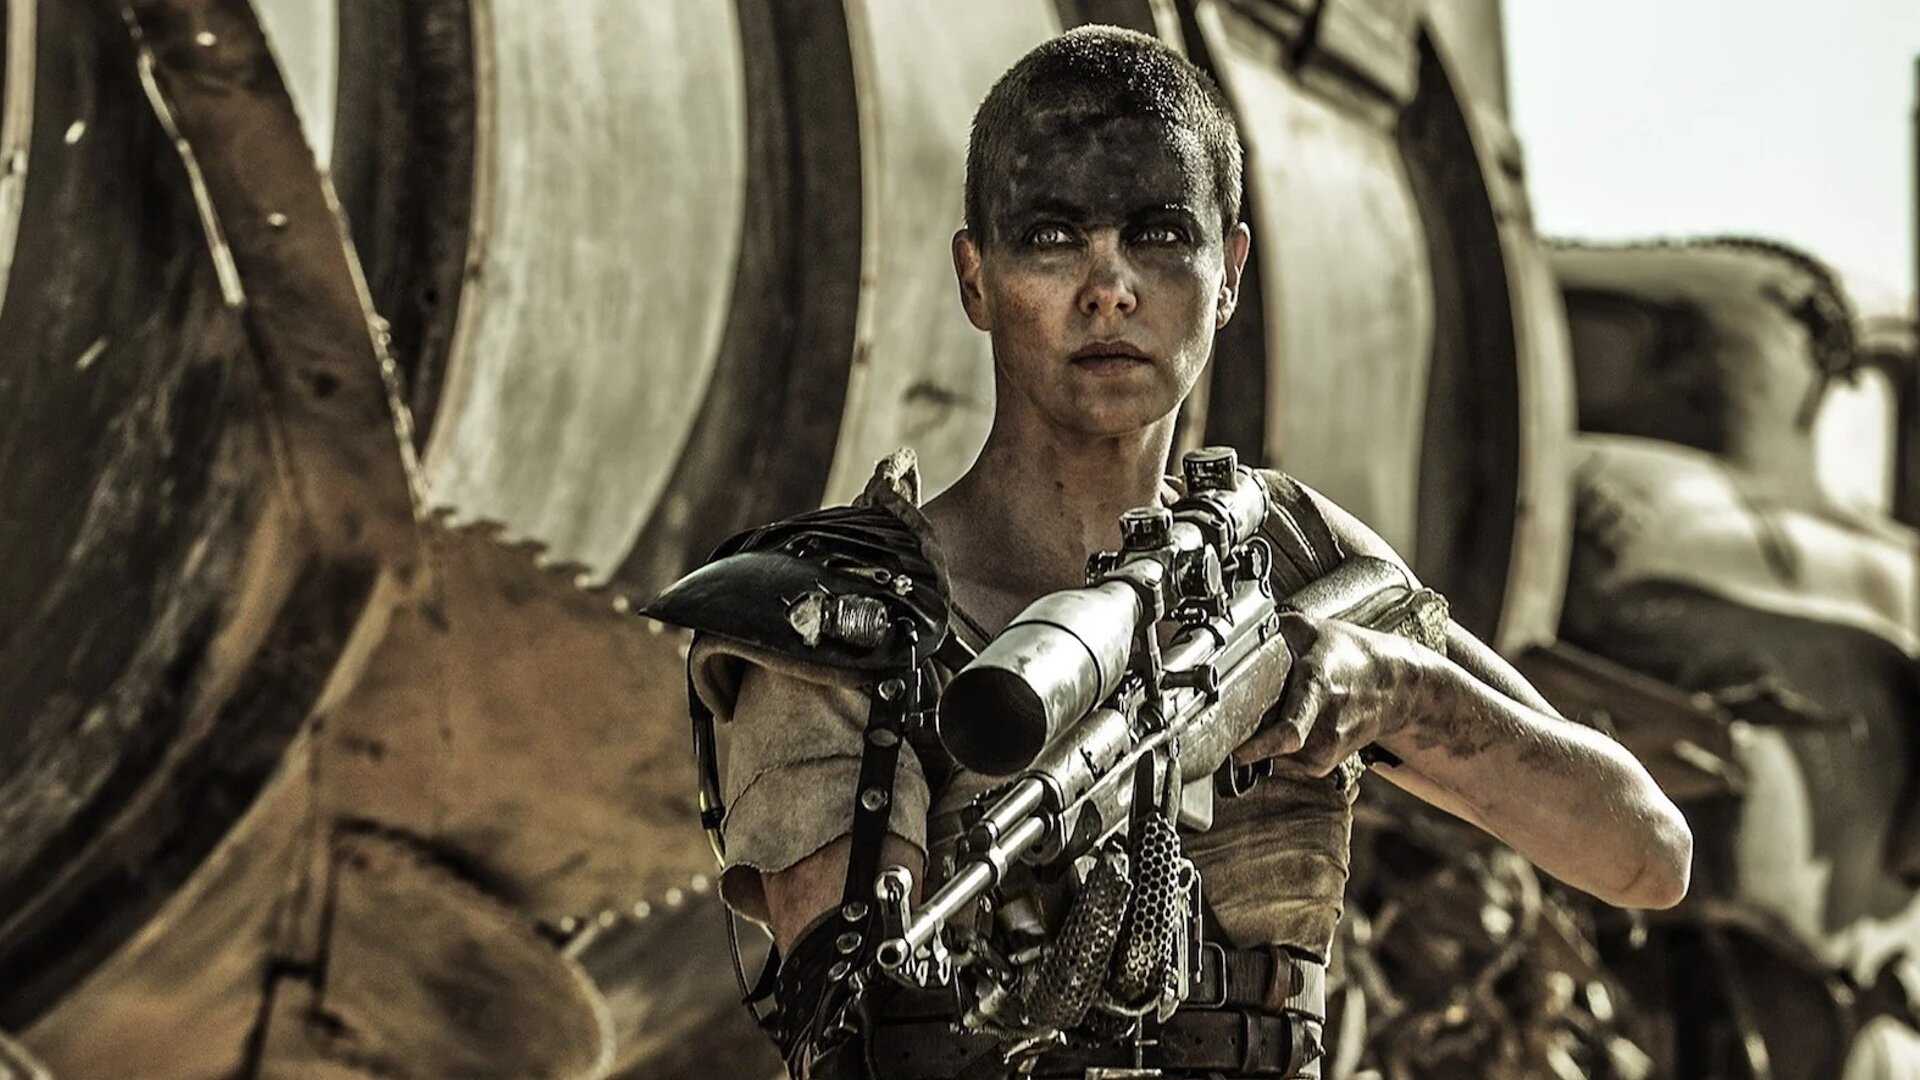 Mad Max spinoff latest set photos gives us our first look at Anya Taylor-Joy as Furiosa